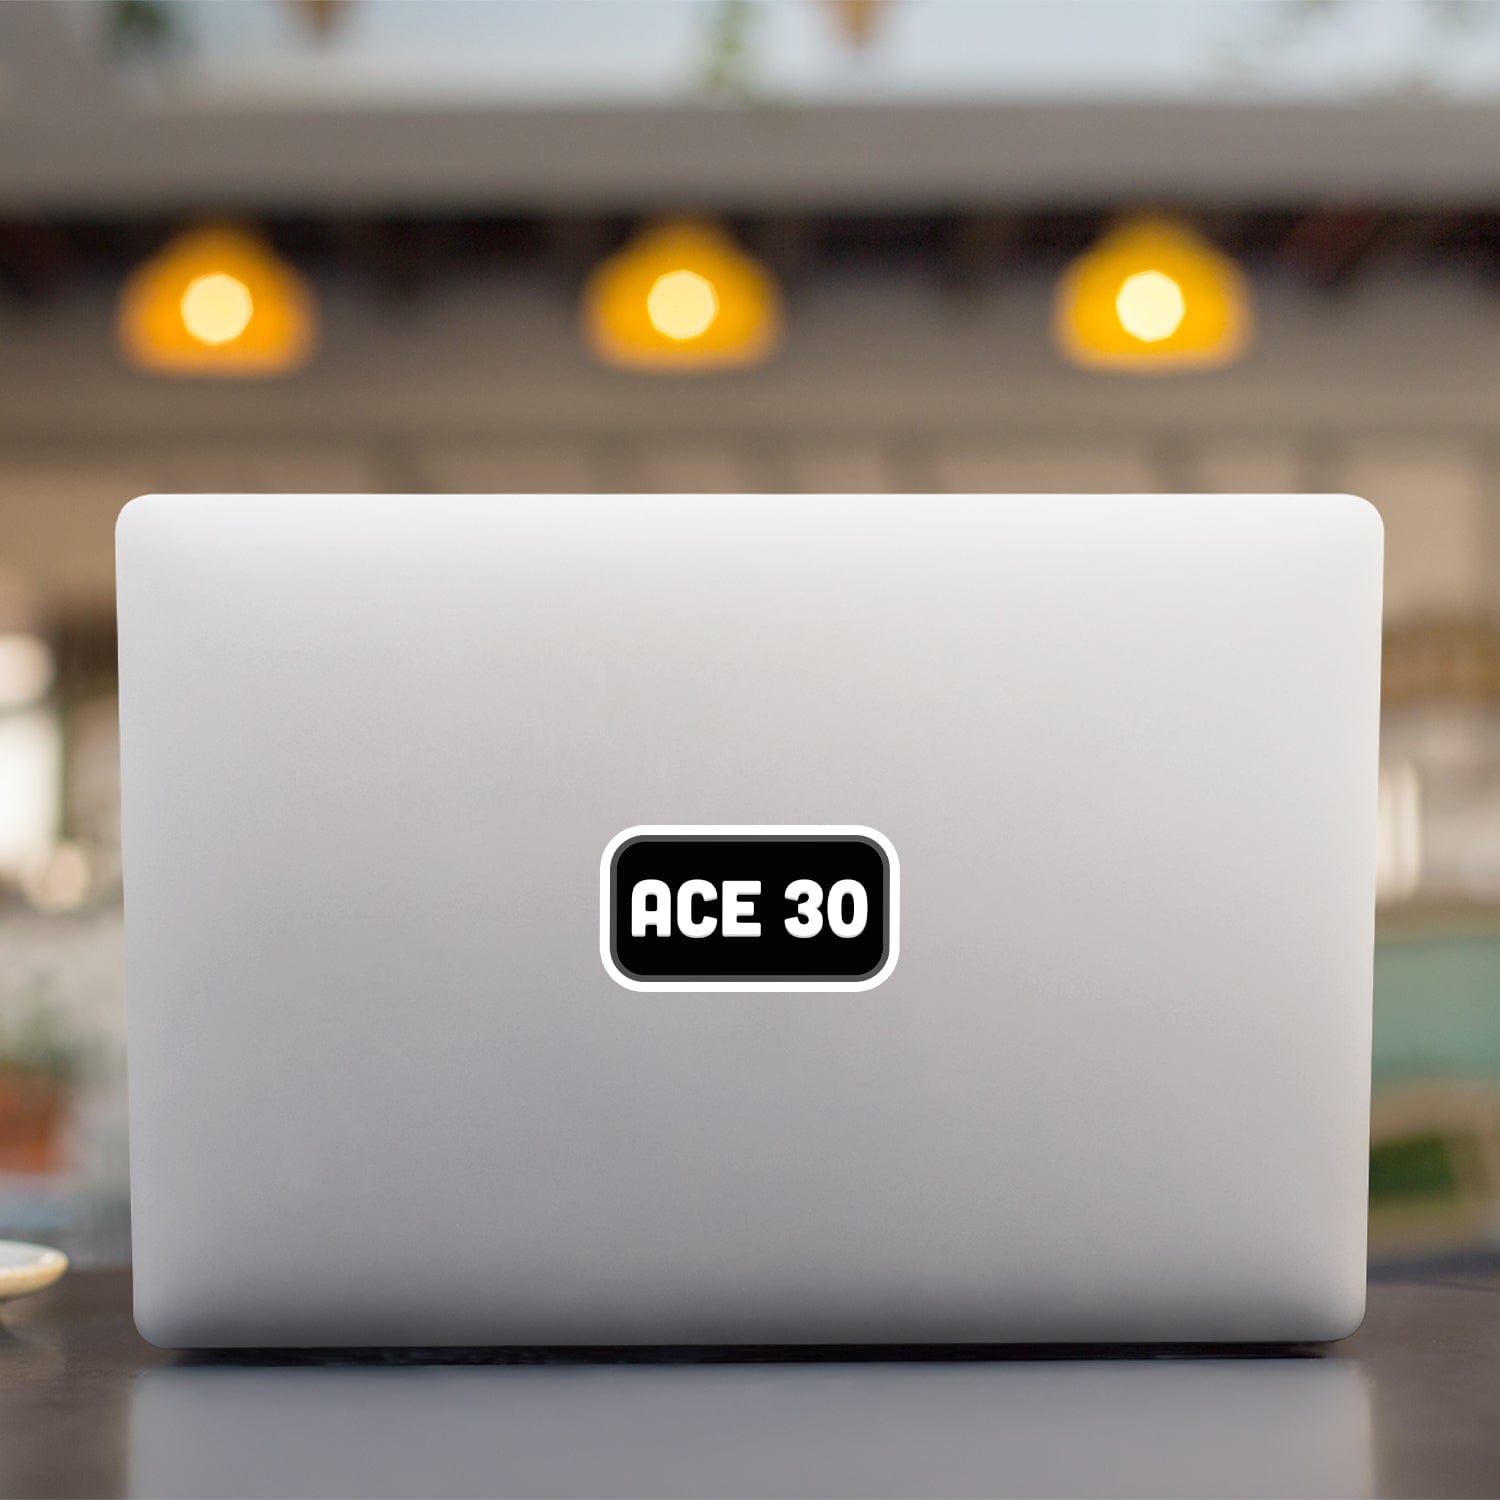 KC Swag Kansas City Royals black, white Ace 30 Patch vinyl die cut decal sticker on open laptop back